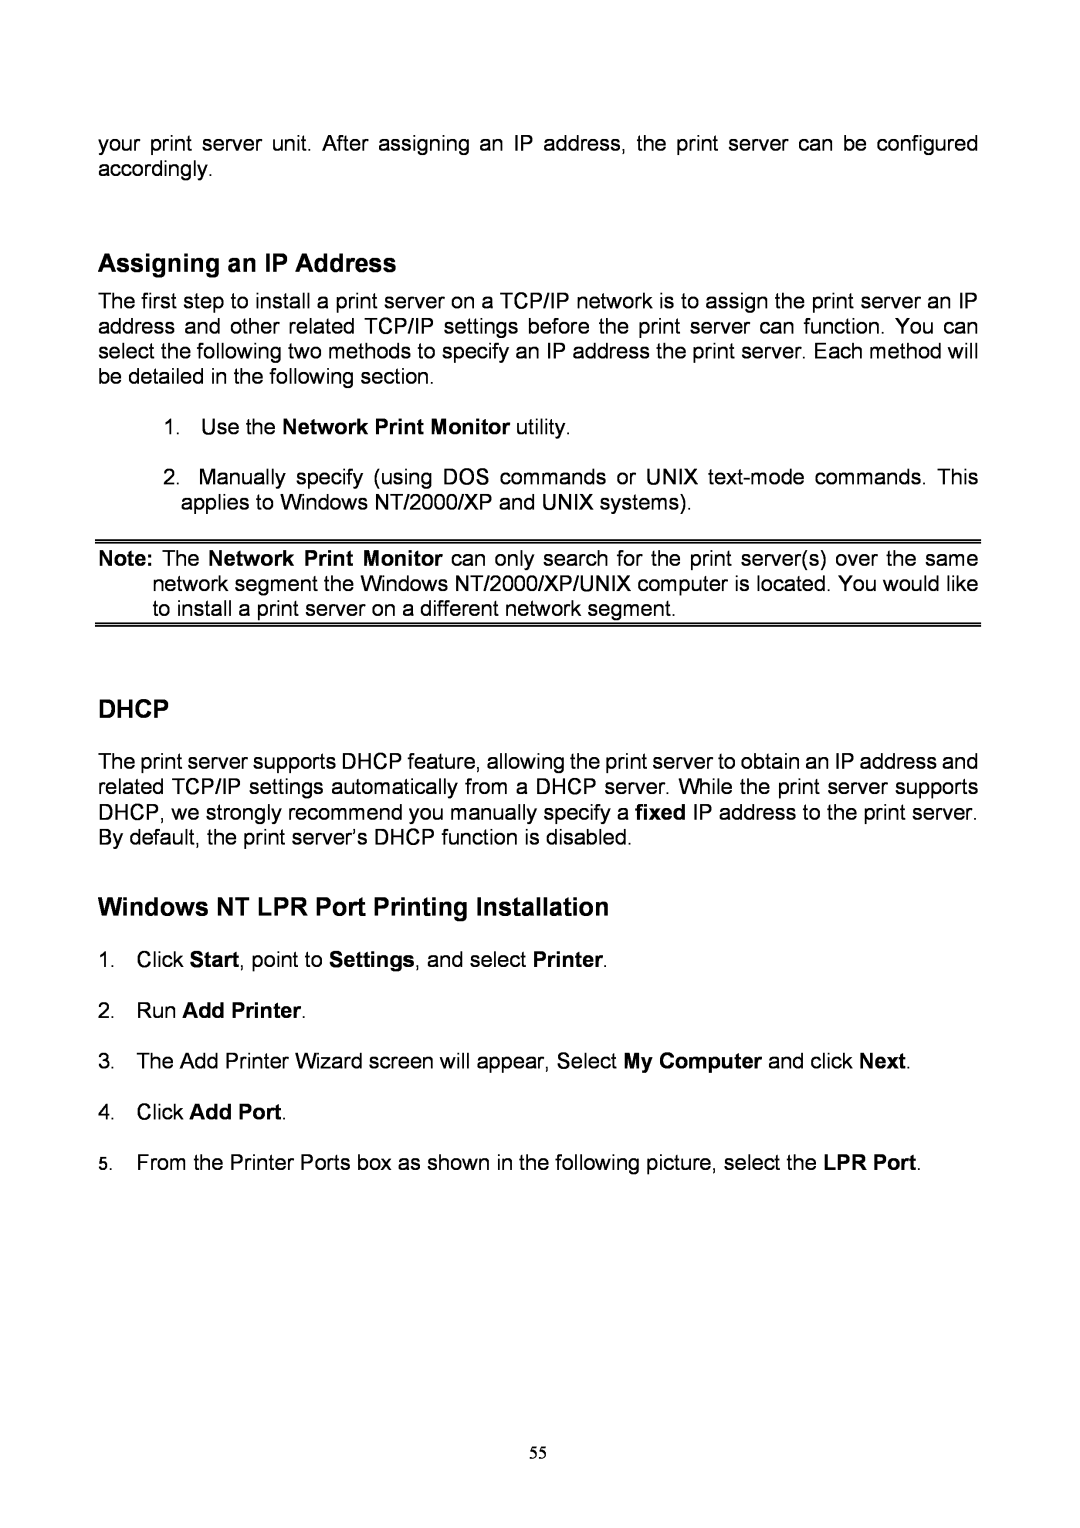 TRENDnet TEW-P1P Assigning an IP Address, Dhcp, Windows NT LPR Port Printing Installation, Run Add Printer, Click Add Port 